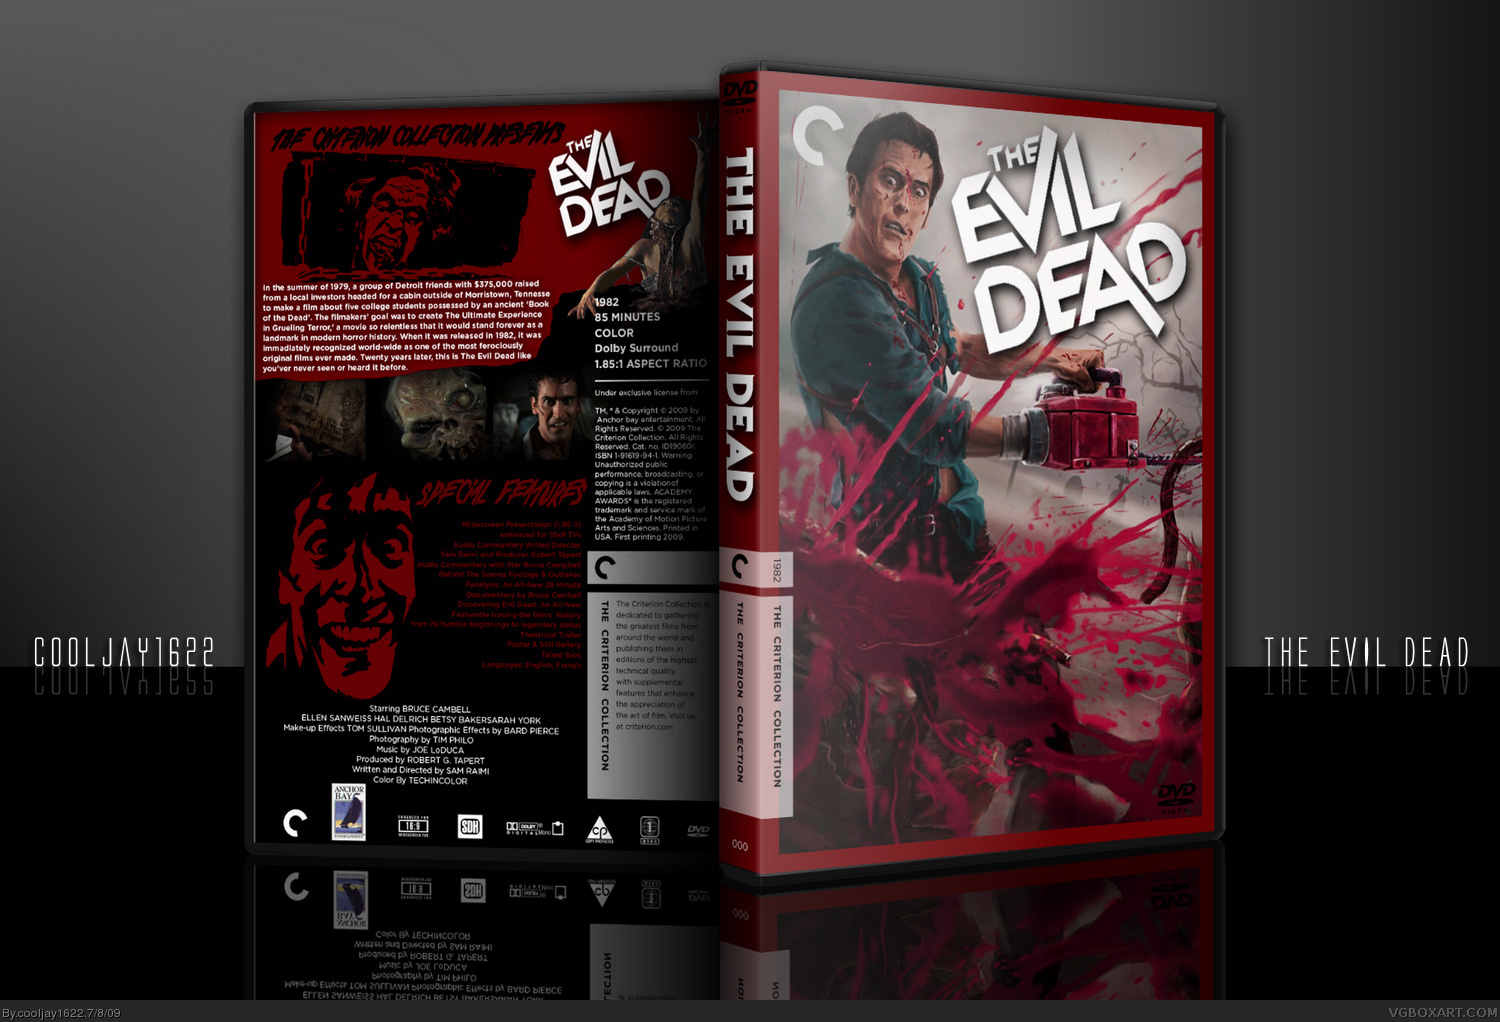 Evil Dead: Regeneration PC Box Art Cover by Warsony